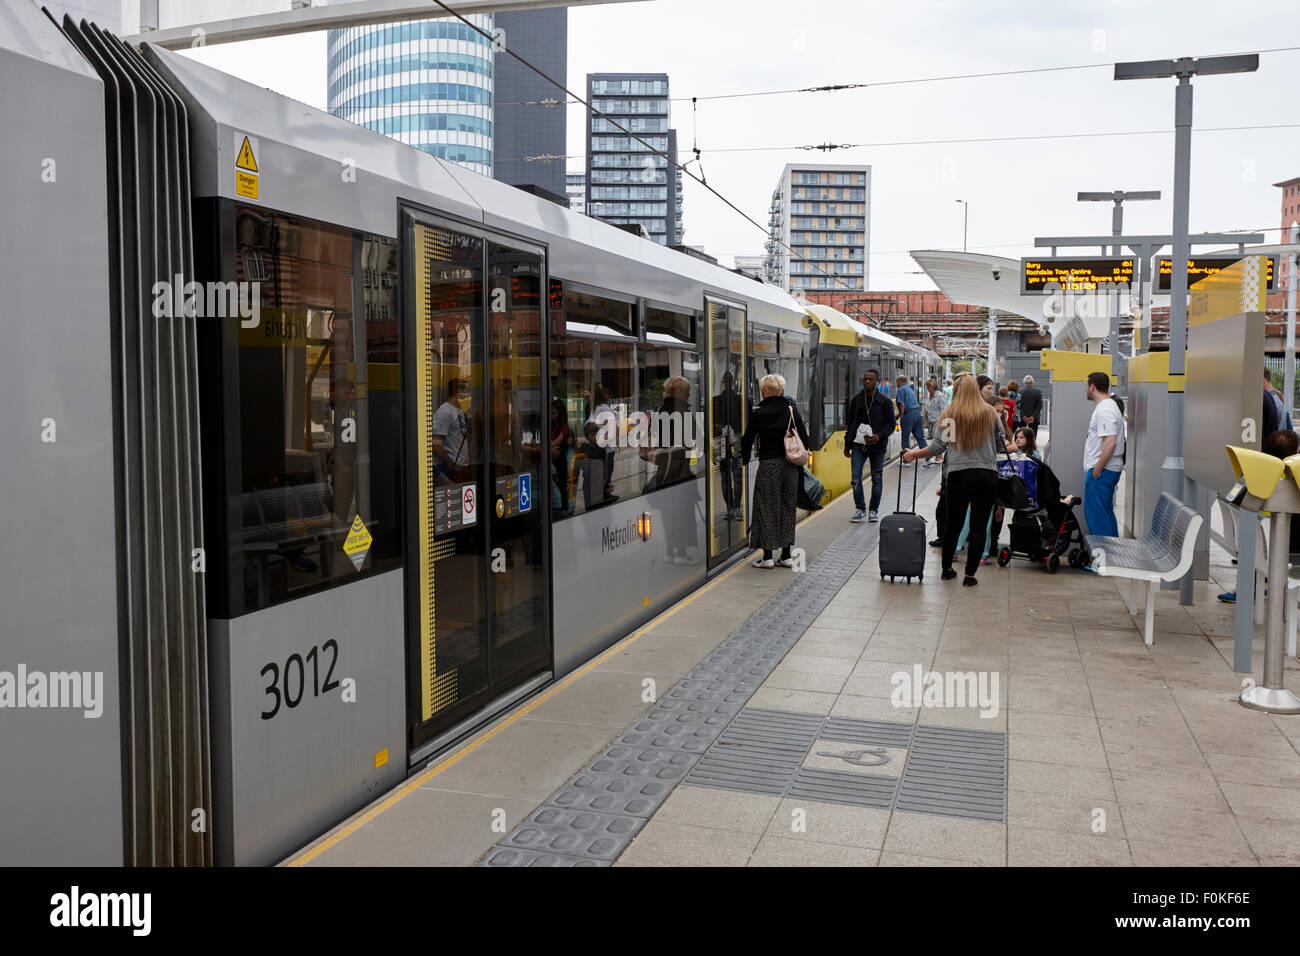 metrolink tram in victoria station Manchester England UK Stock Photo